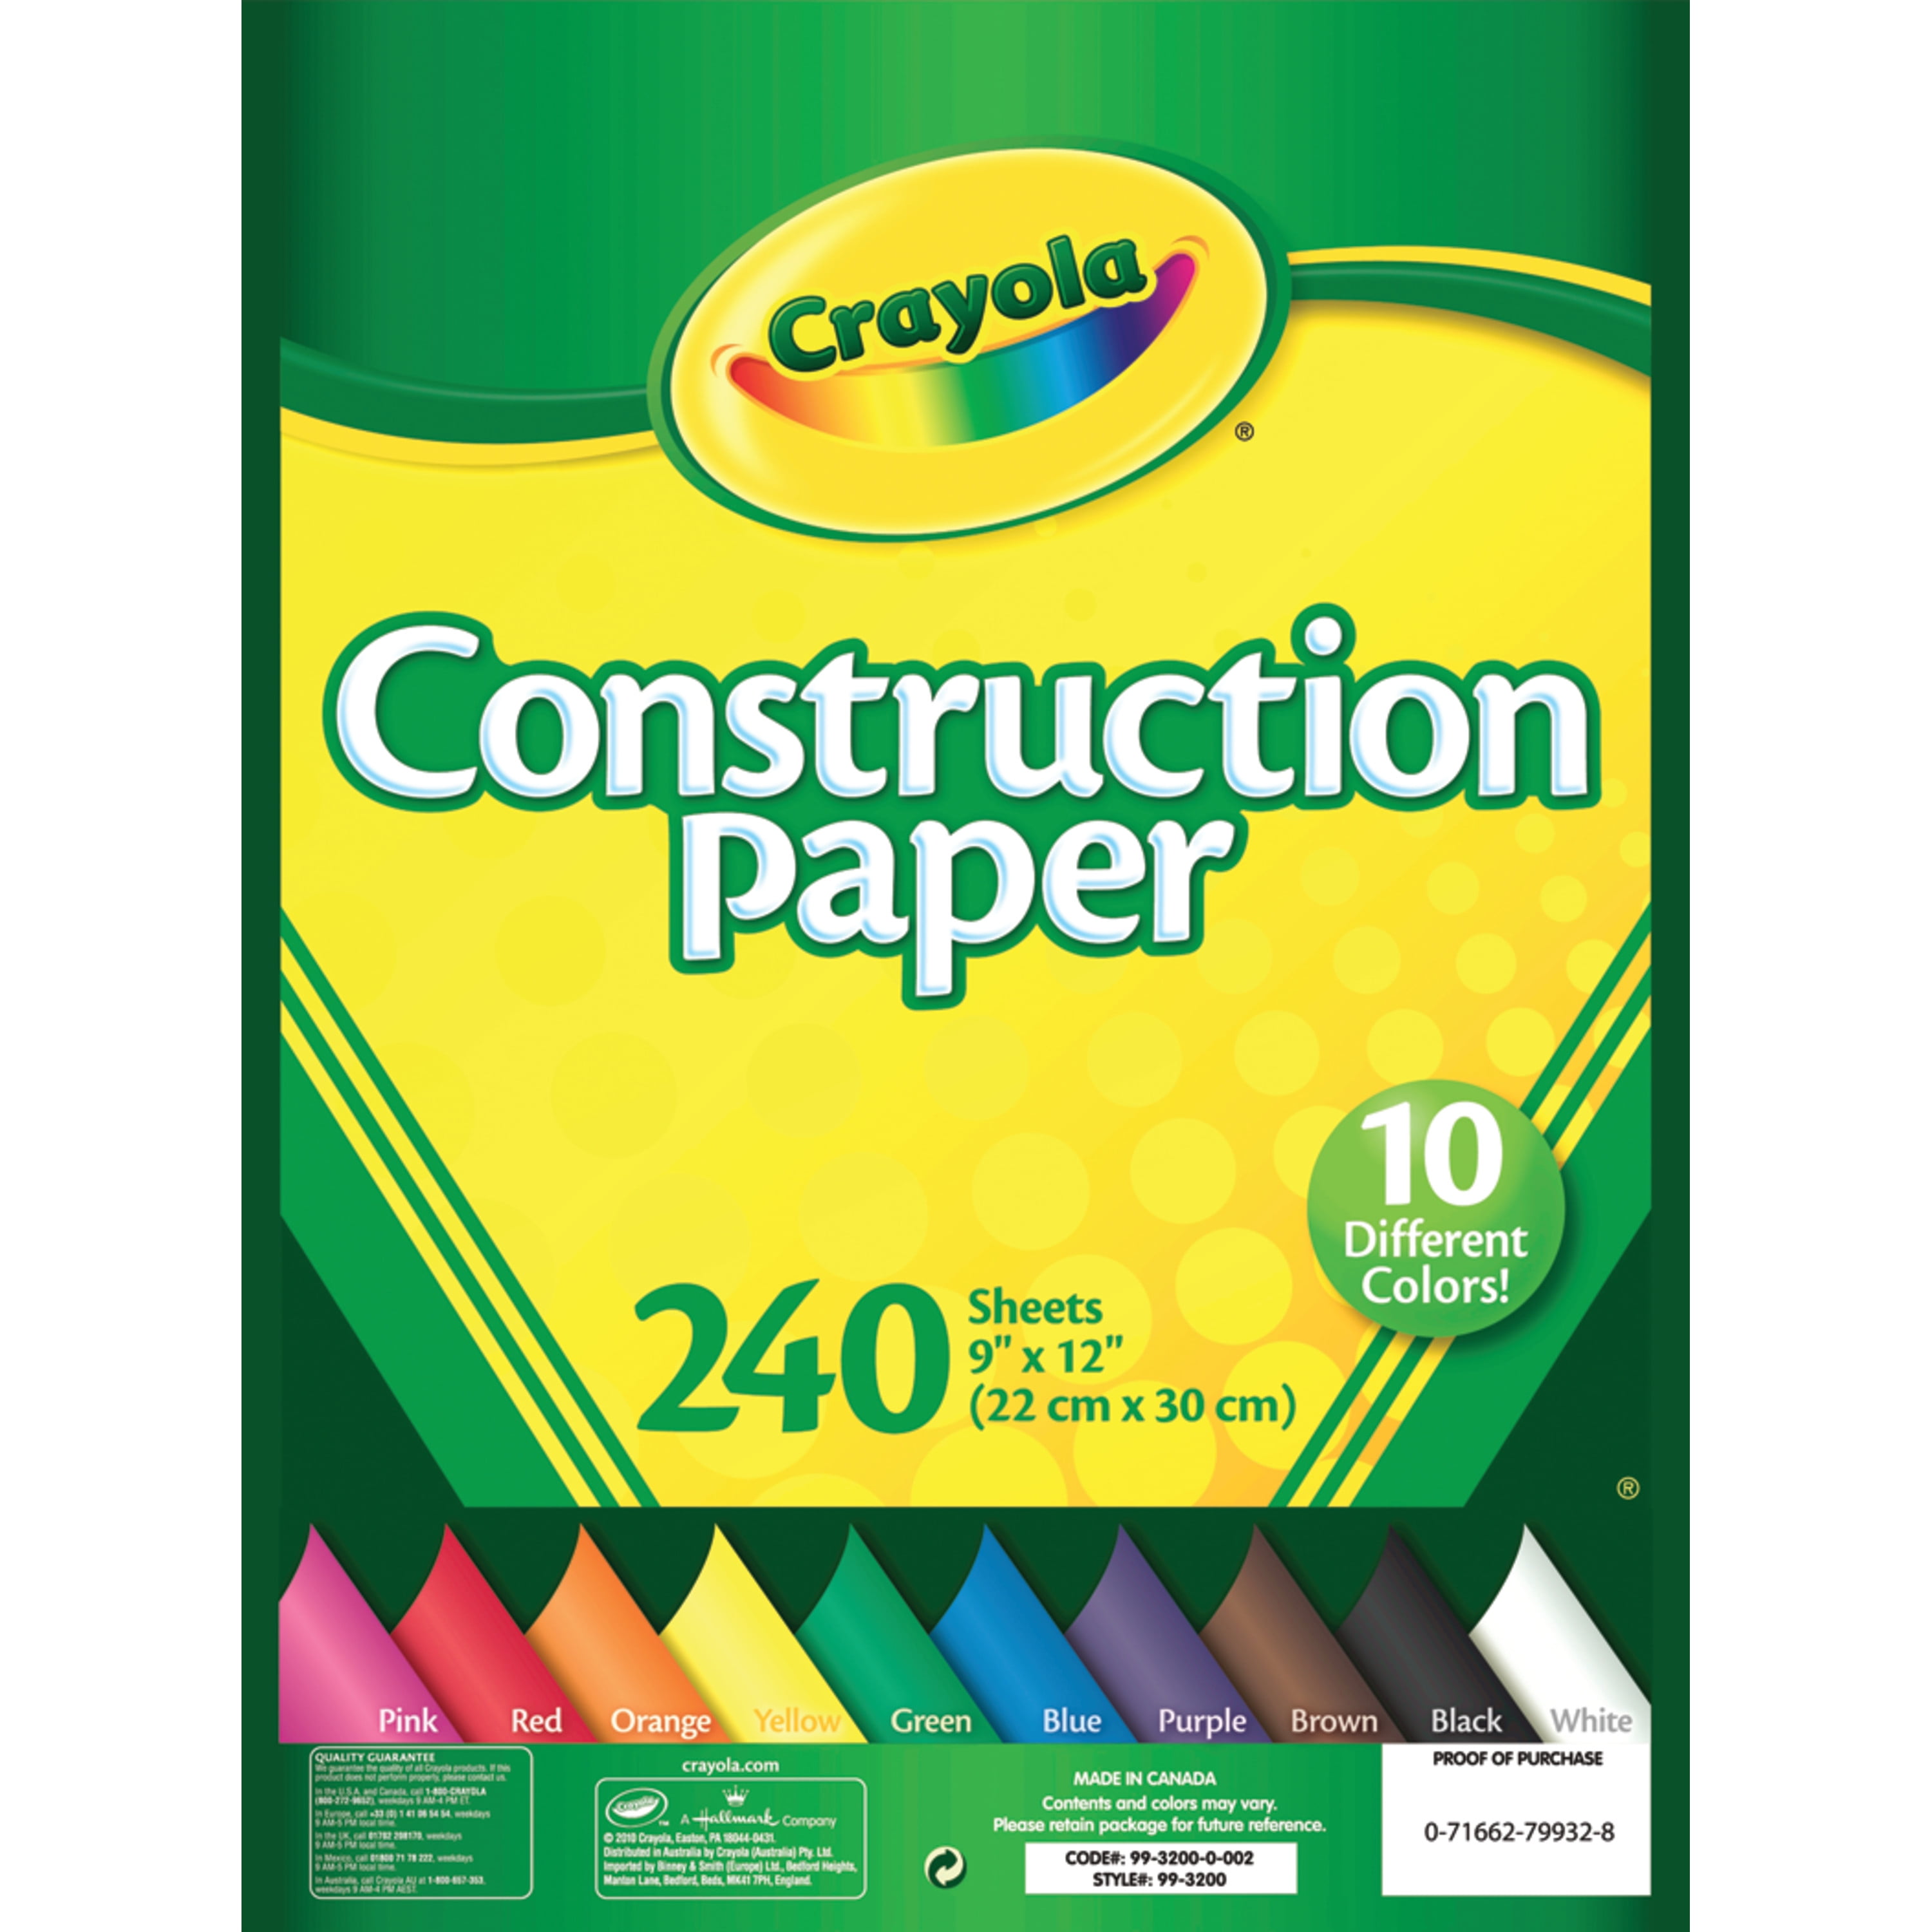 Crayola Construction Paper Pad 9X12 240 Sheets